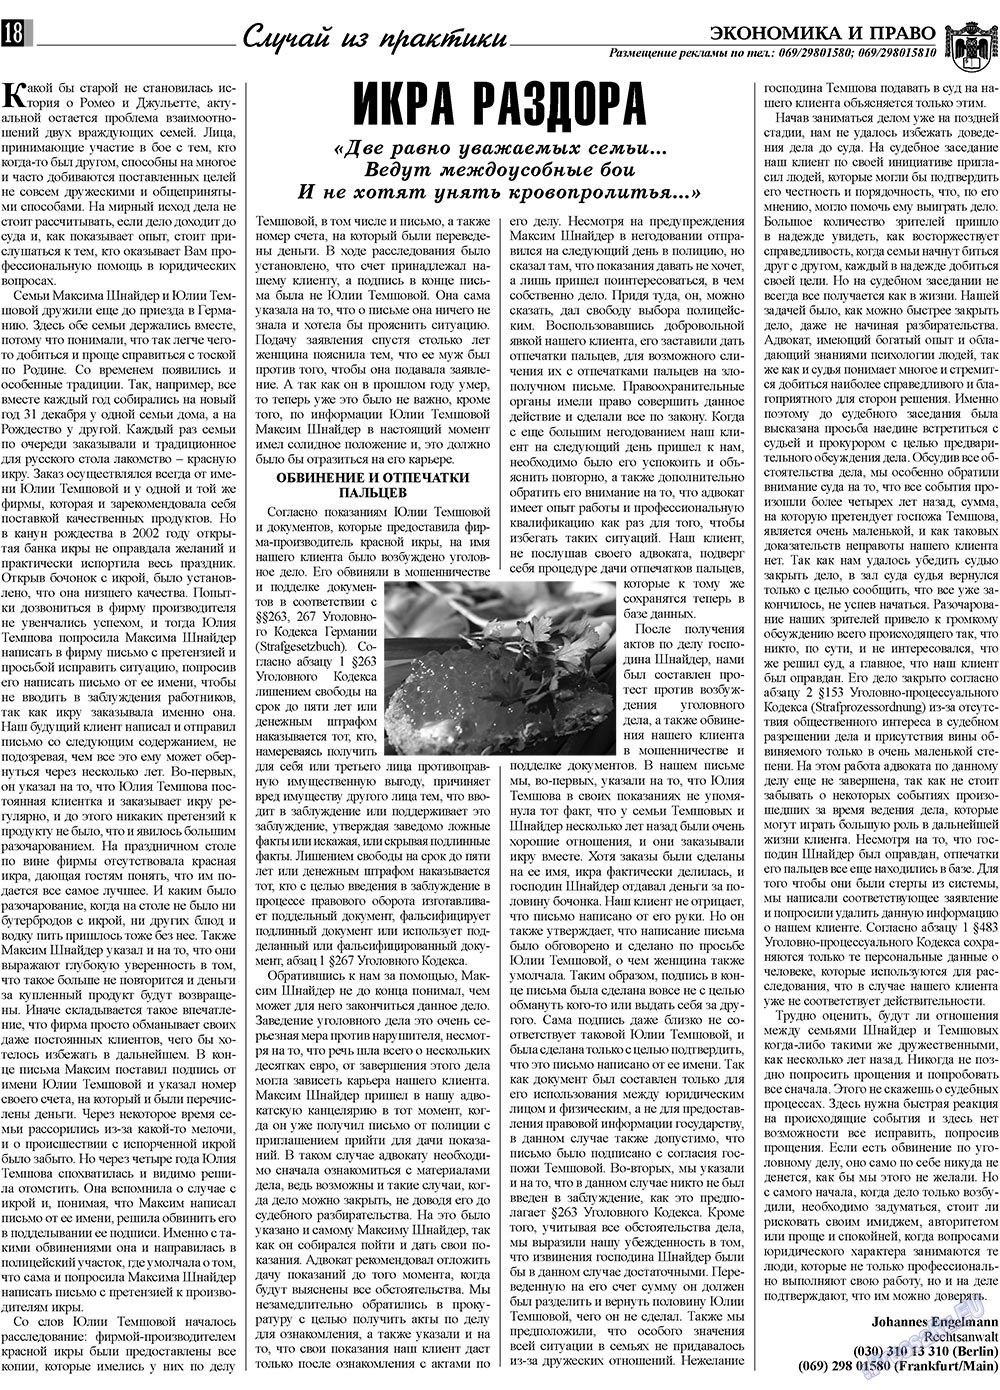 Ekonomika i pravo (Zeitung). 2009 Jahr, Ausgabe 6, Seite 18